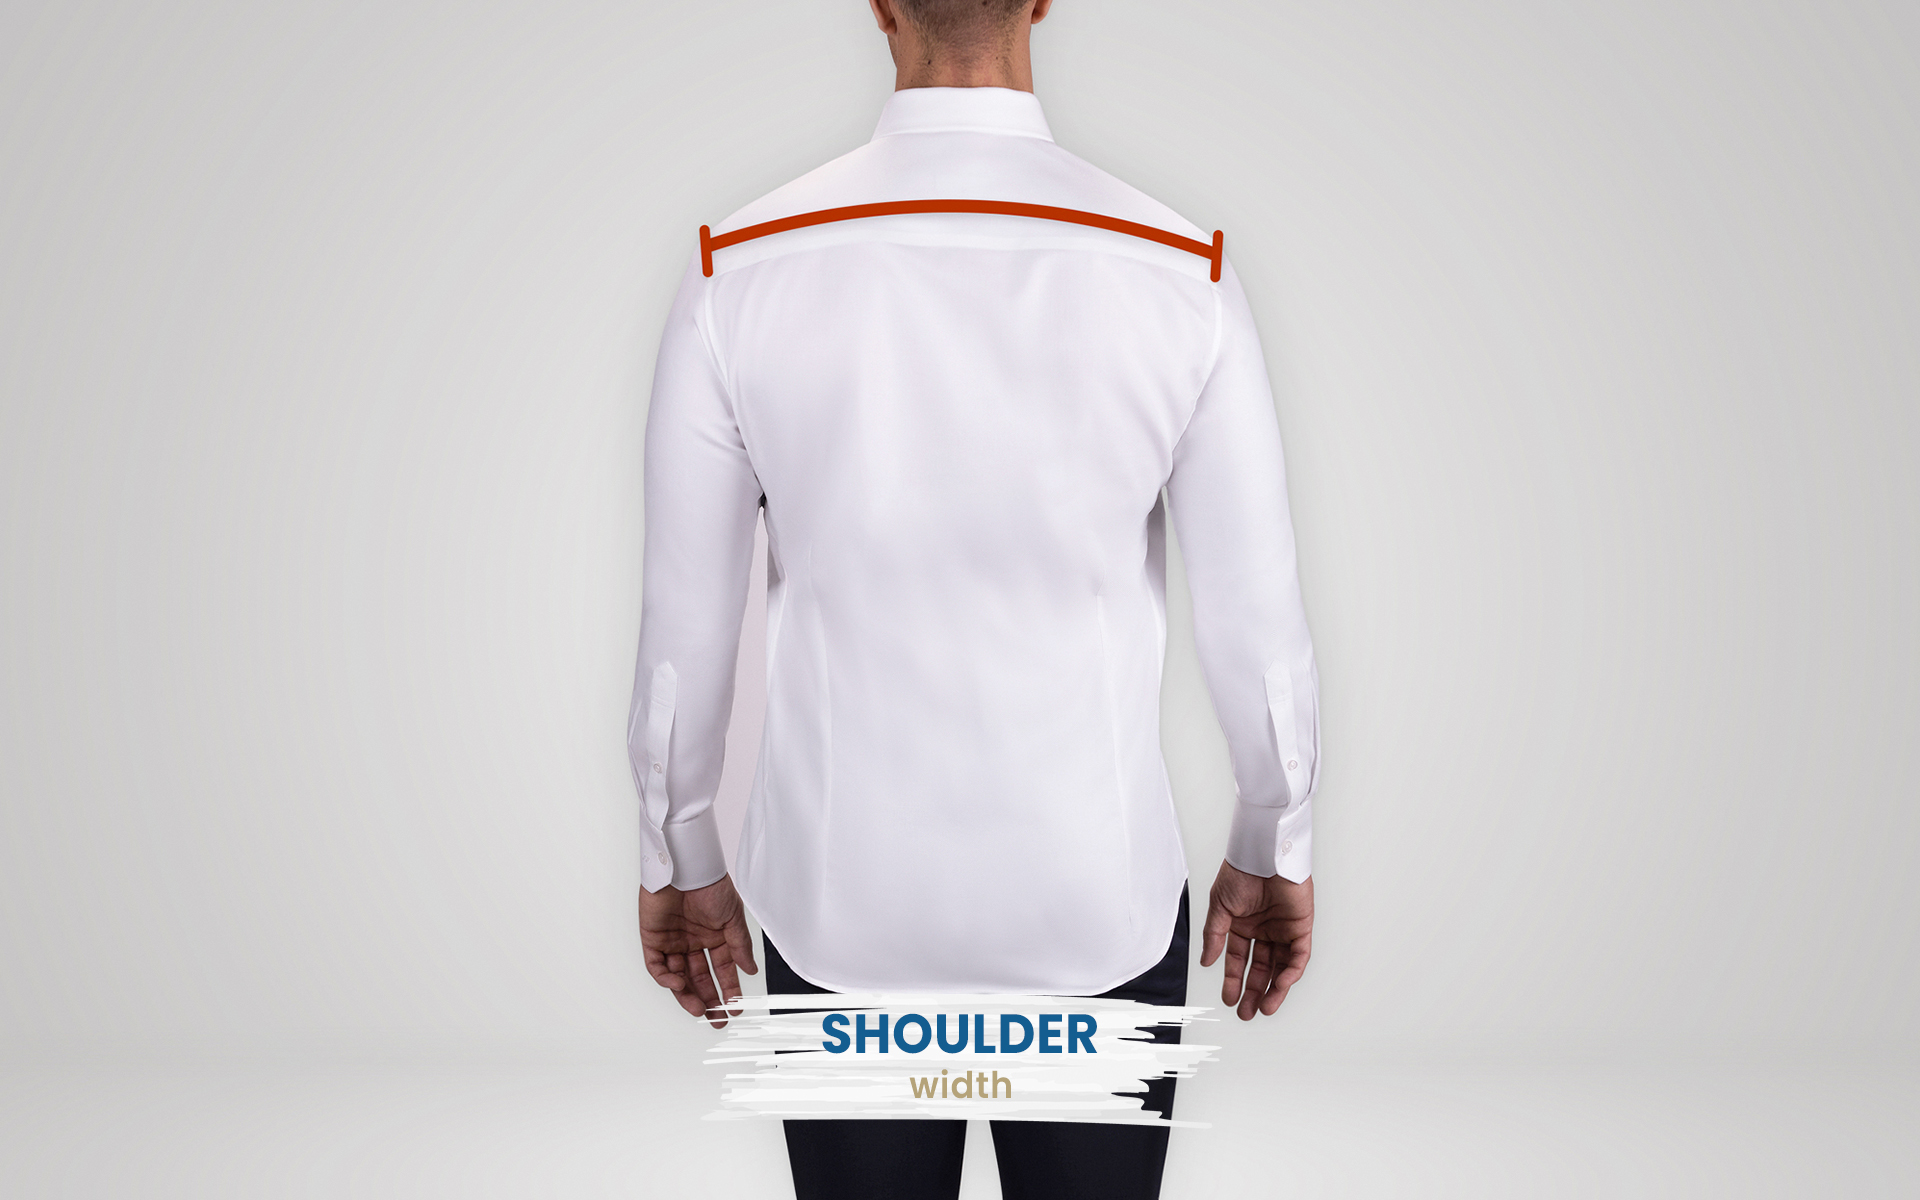 how to measure dress shirt shoulder width